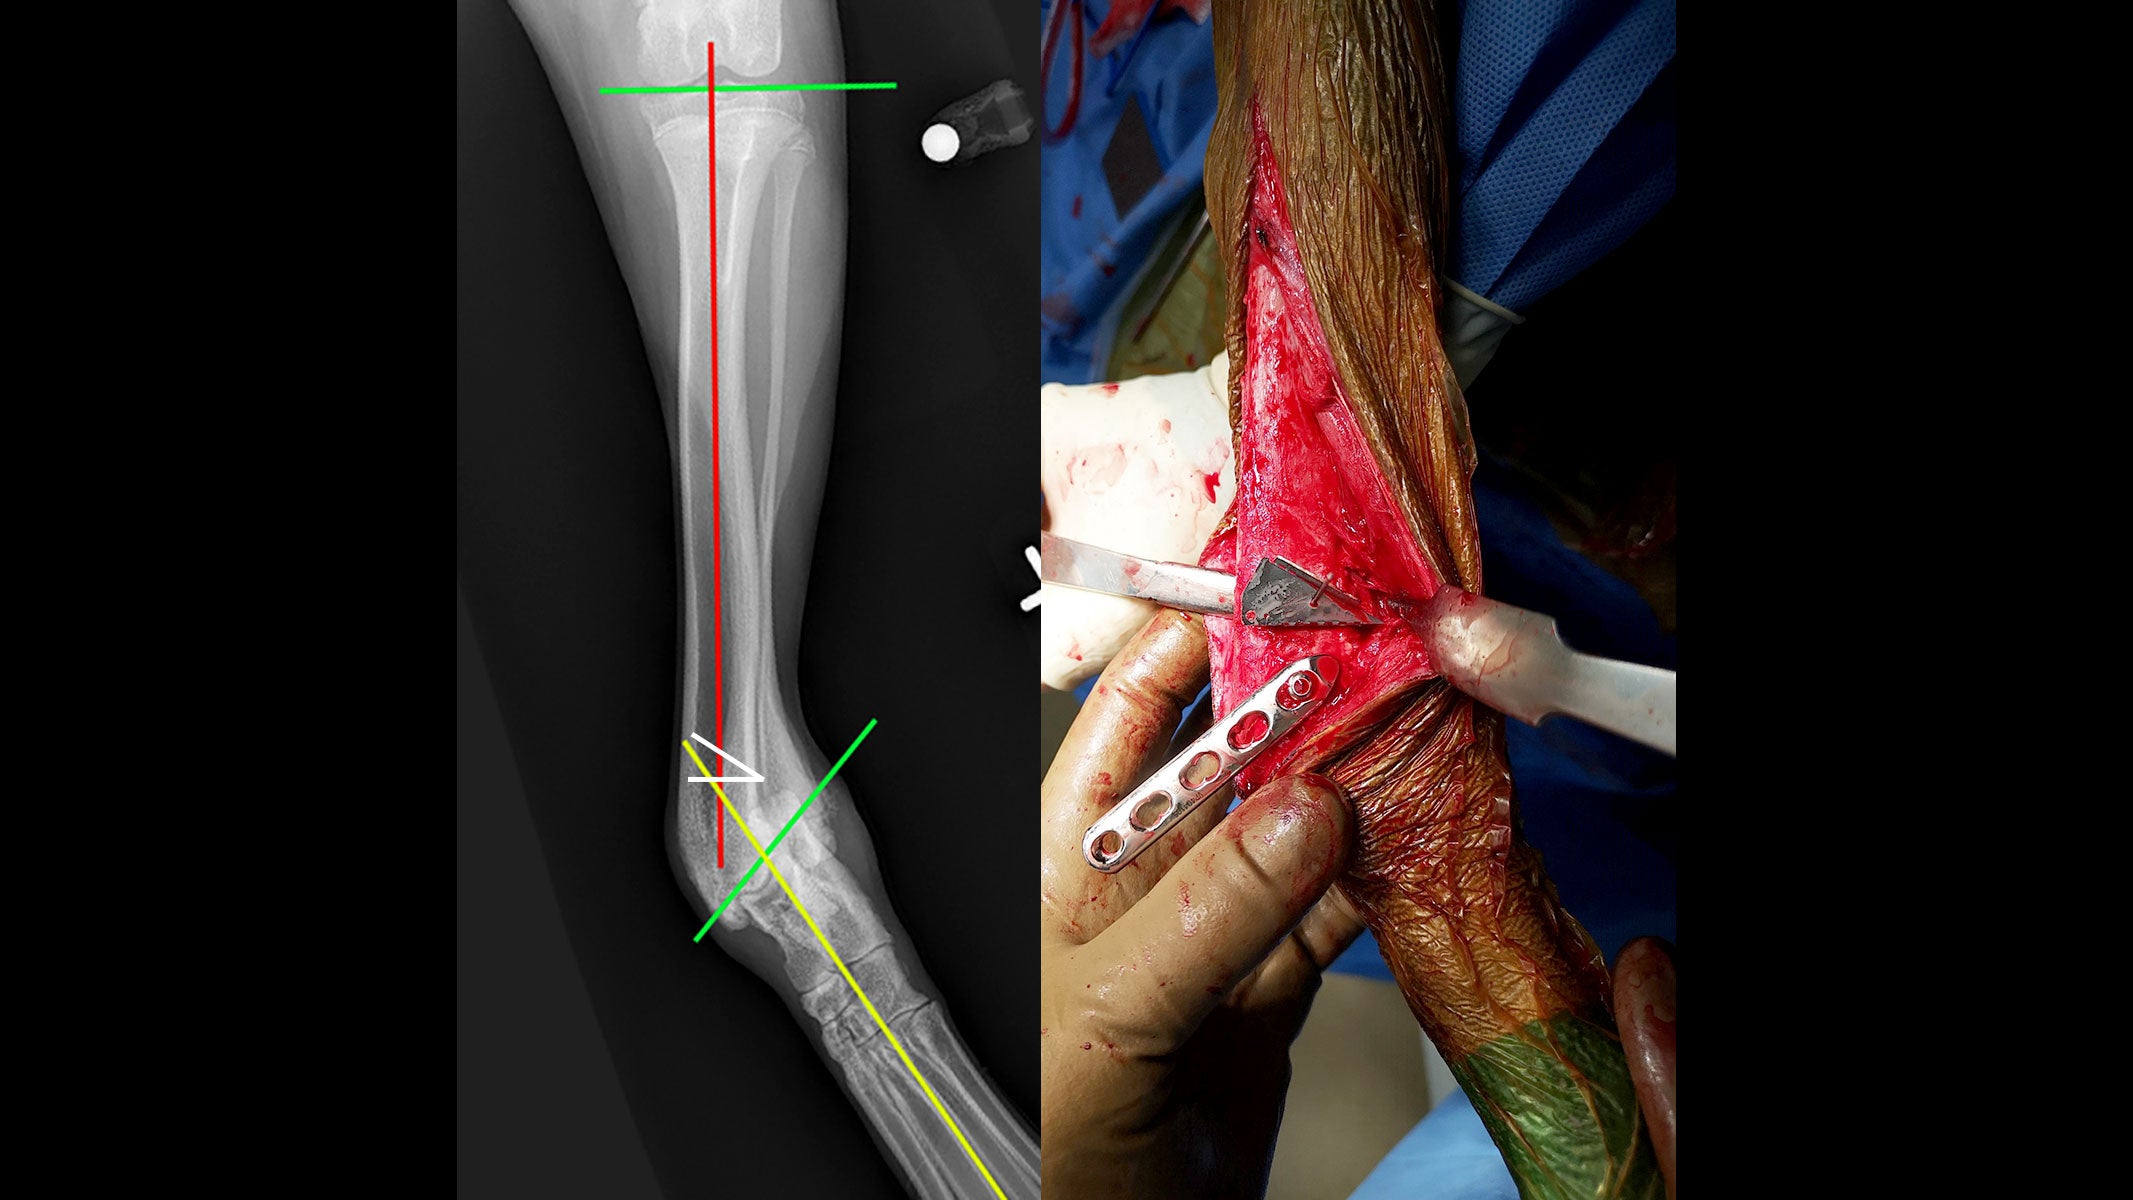 Radiograph and  gross anatomy images illustrating correction of an angular deformity